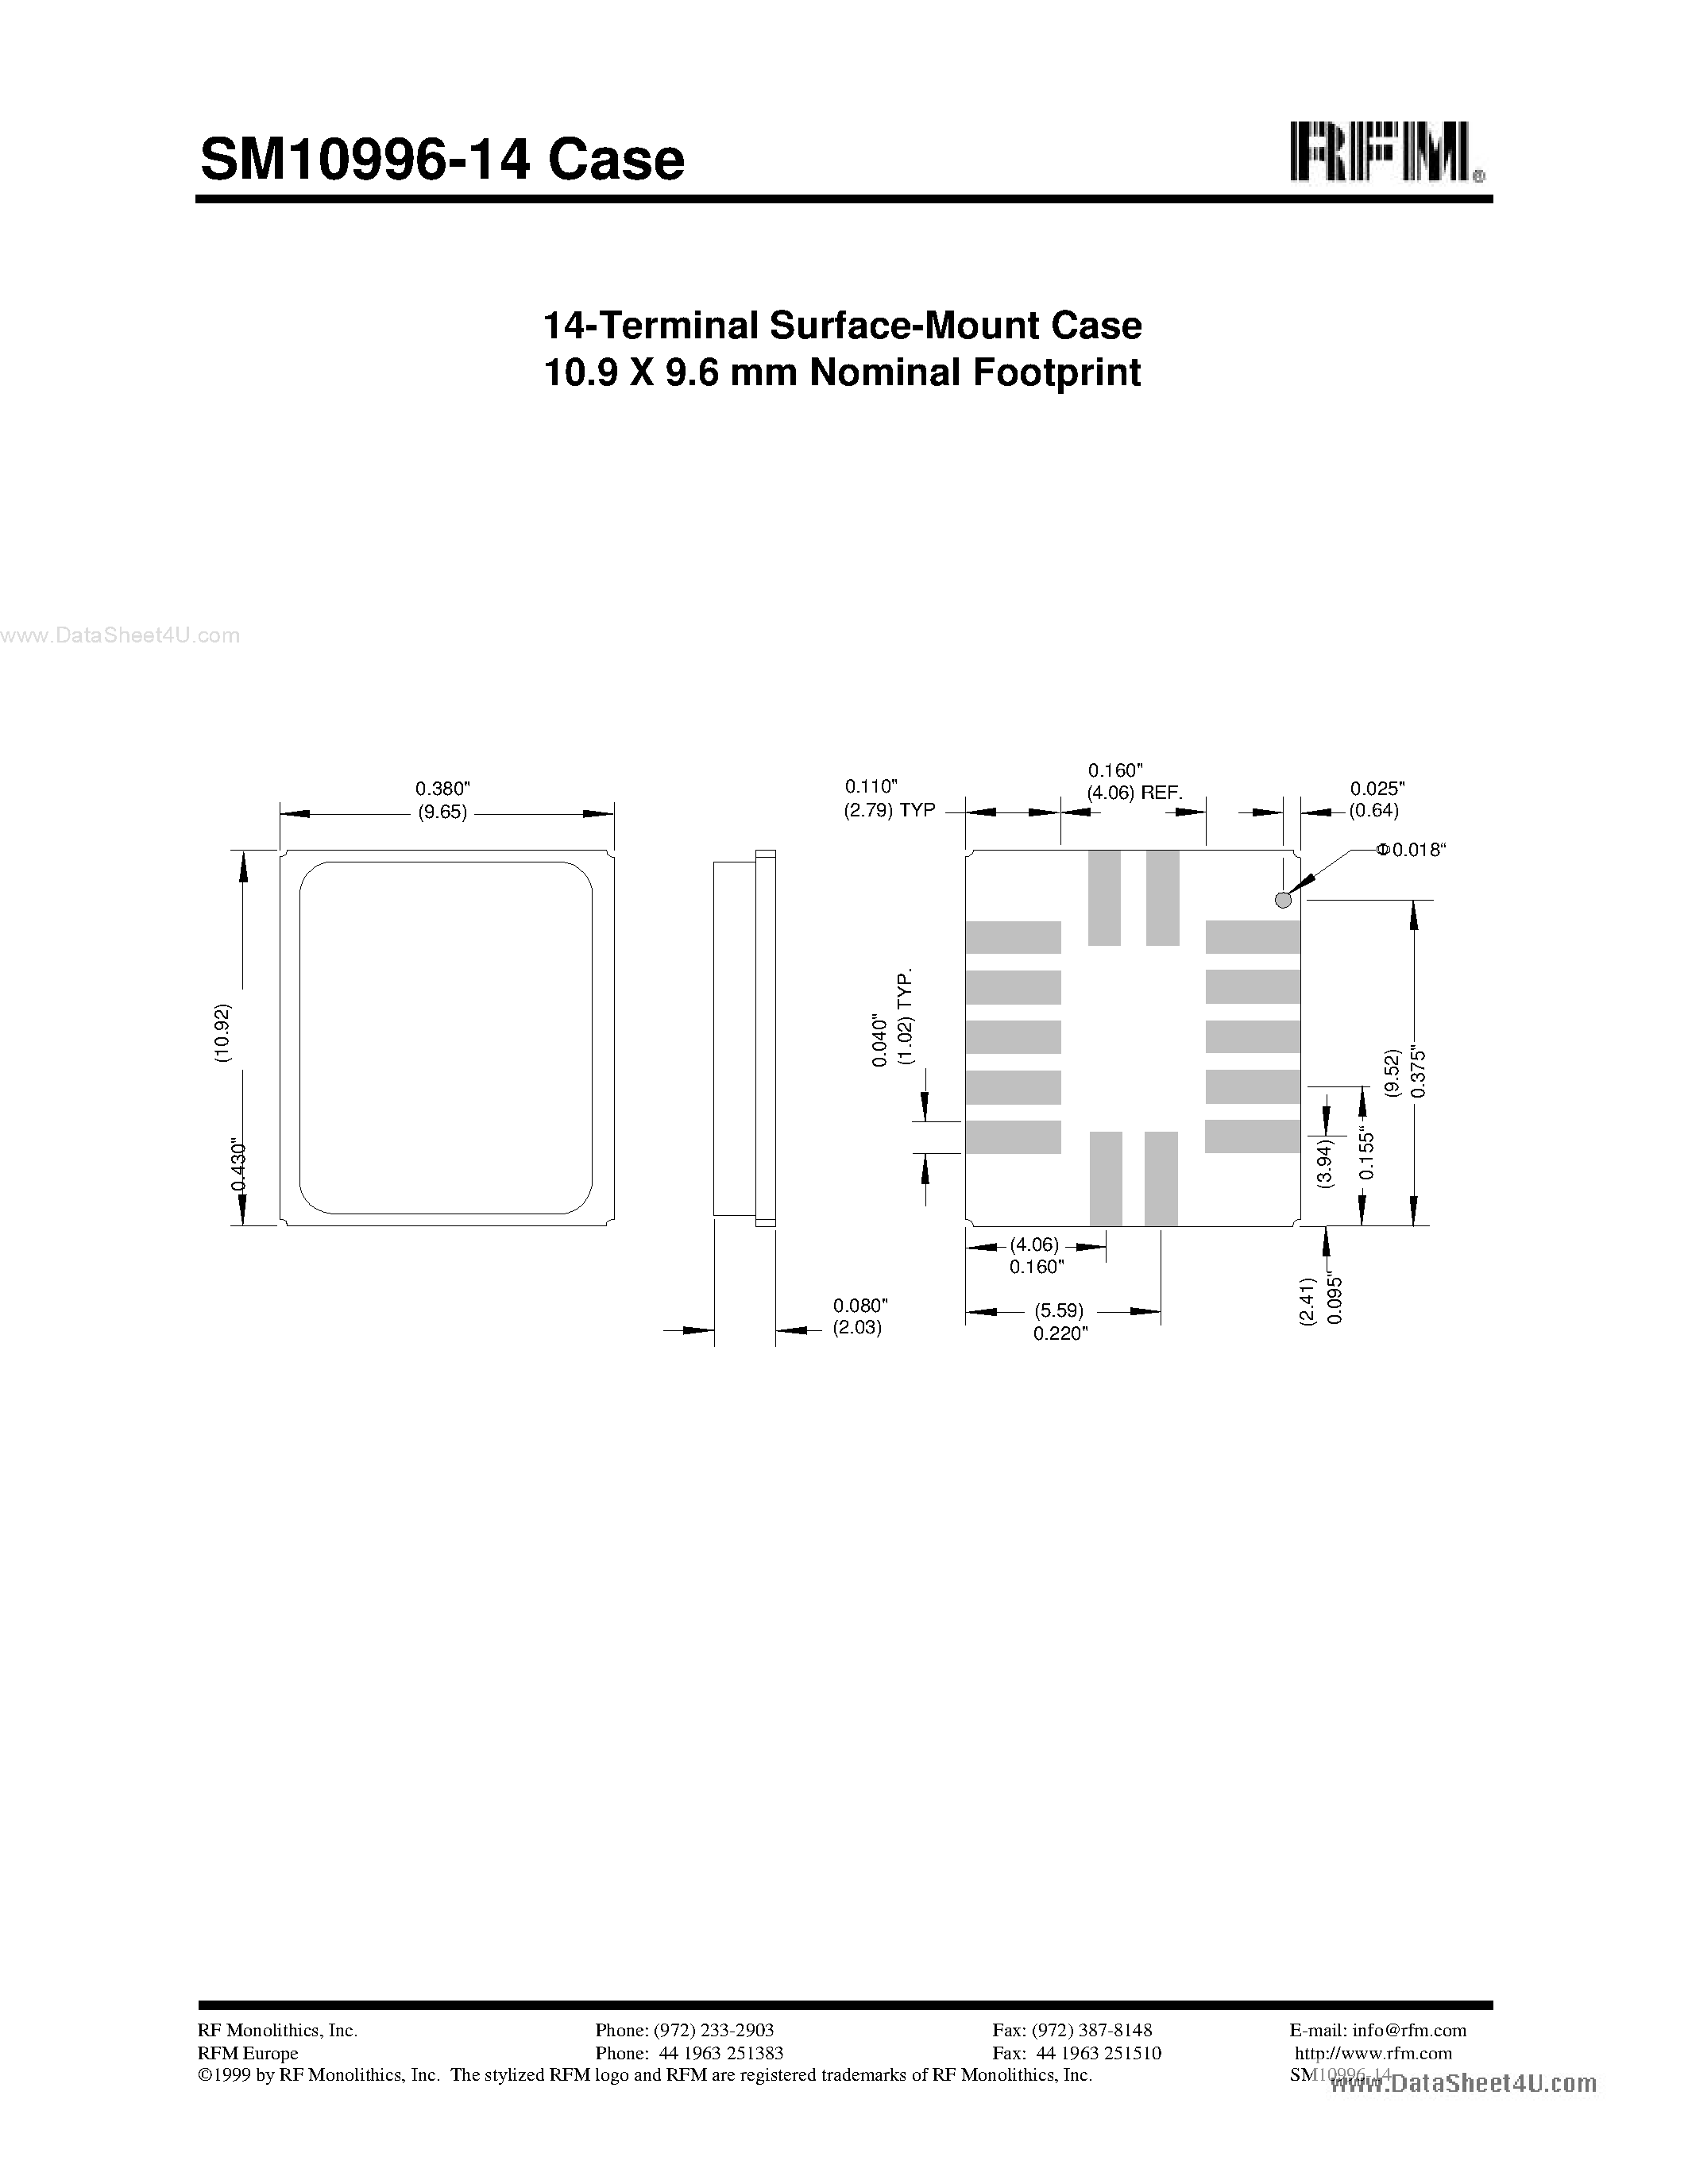 Даташит SM10996-14 - 14-Terminal Surface-Mount Case 10.9 X 9.6 mm Nominal Footprint страница 1